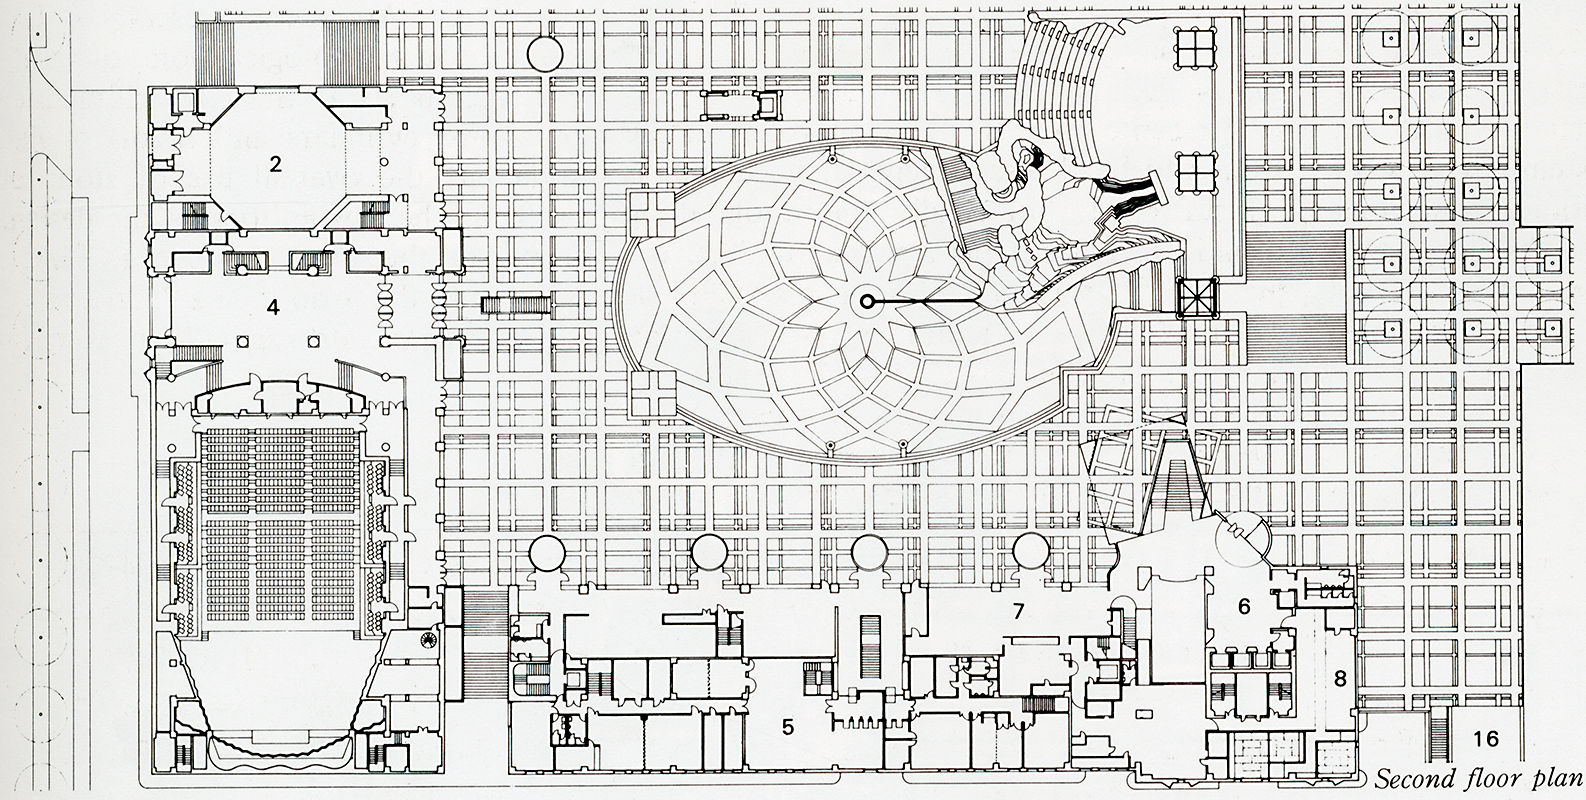 Floor Plan of the MOCA by Arata Isozaki